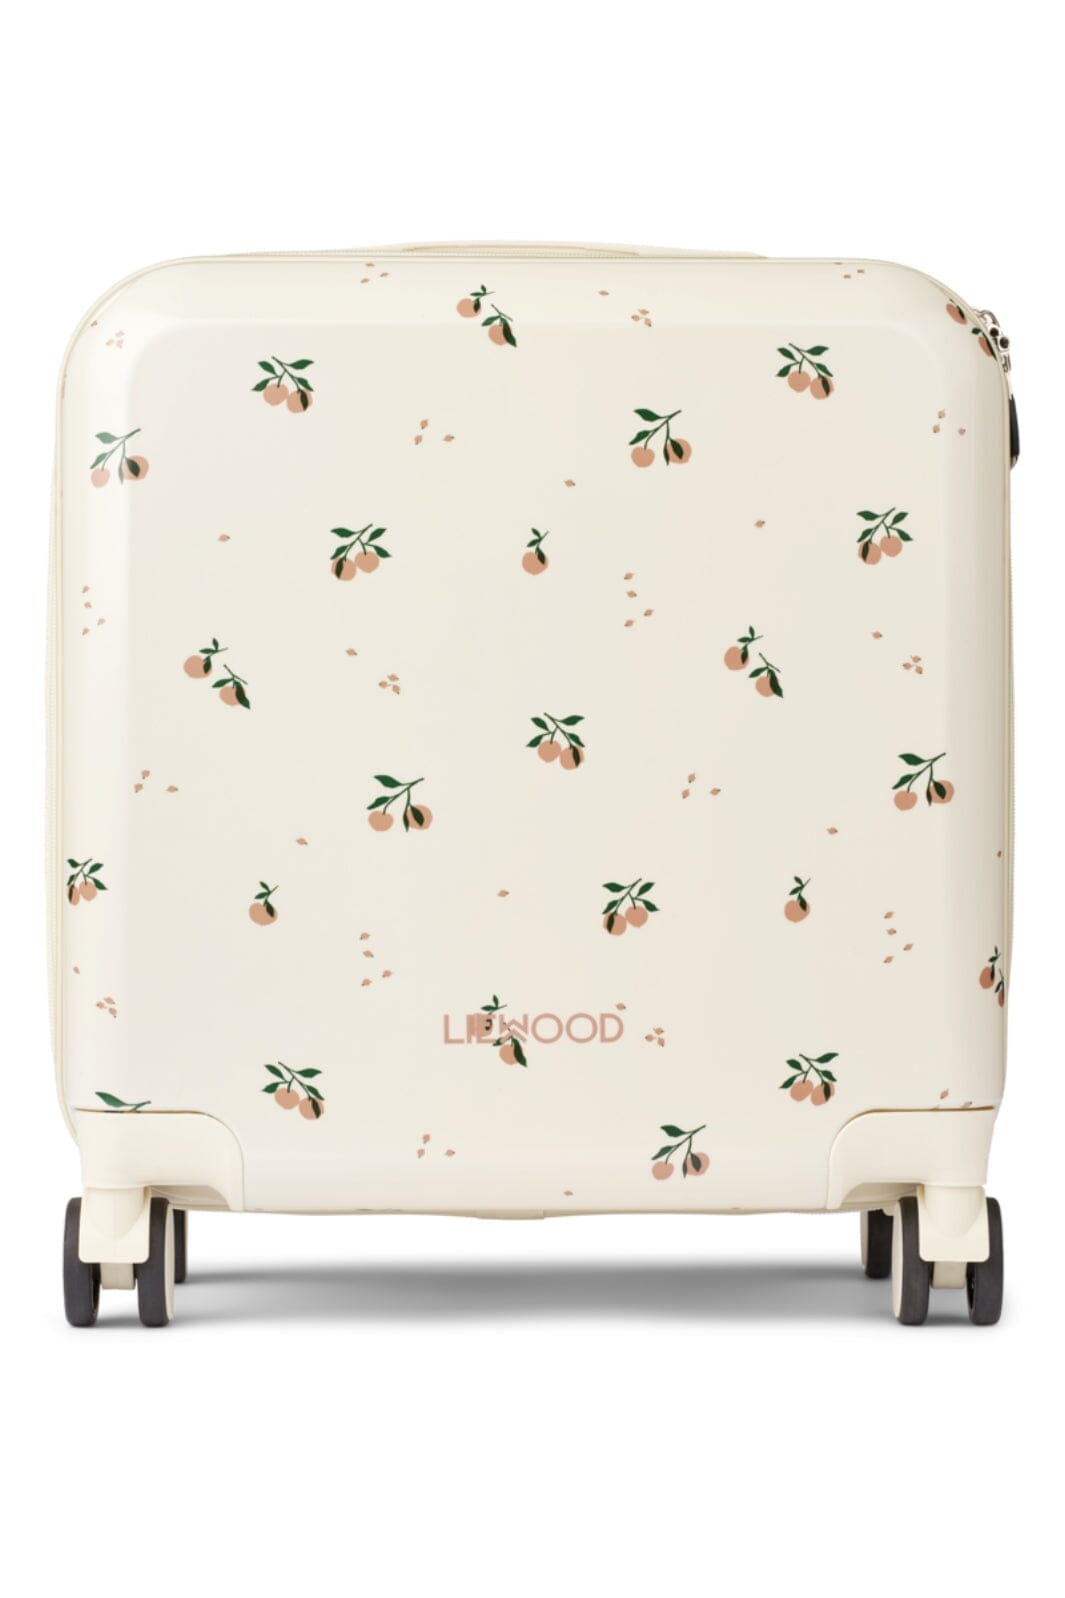 Liewood - Hollie Hardcase Suitcase - Peach / Sea Shell Tasker 